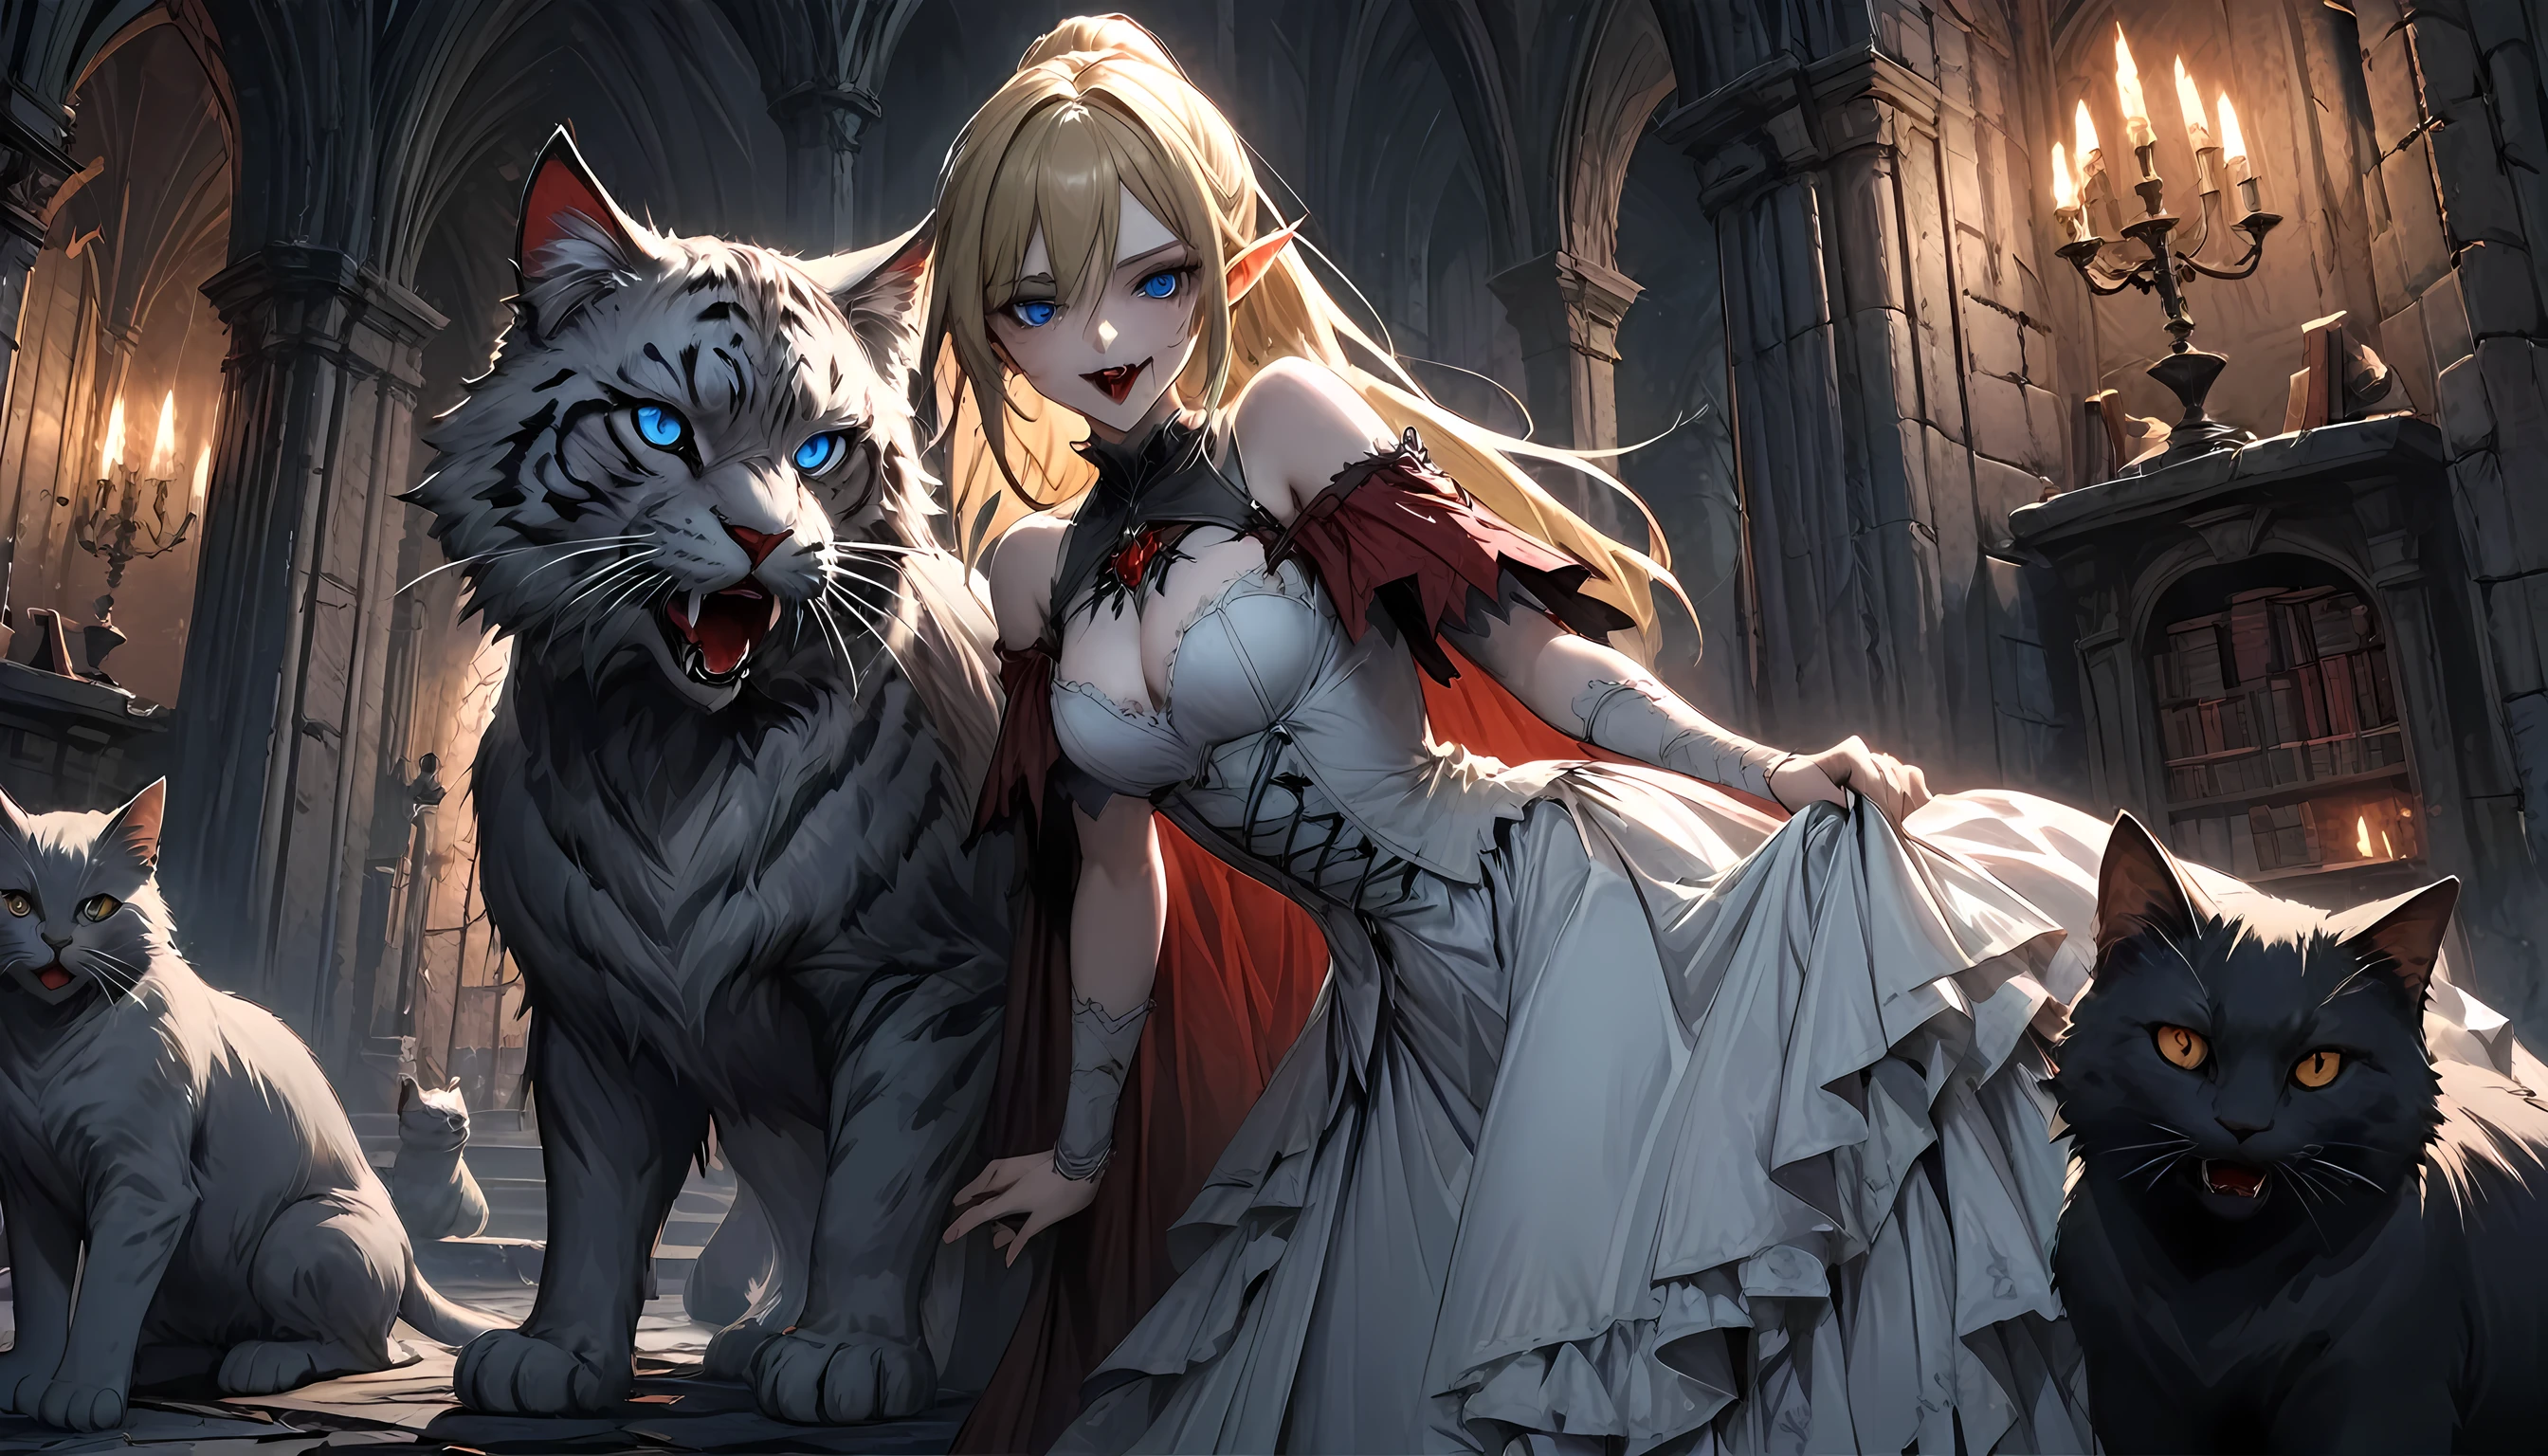 arafed 是一张精灵吸血鬼在她的城堡里的照片，还有她的宠物史诗猫，一只精致美丽的女精灵吸血鬼 (超详细, 杰作, 最好的质量), 血腥的嘴 金发, 皮肤苍白, 马尾辫, 长发, 蓝眼睛, 冷眼, 傻笑, 穿着白色连衣裙 (超详细, 杰作, 最好的质量), 红色斗篷, 在黑暗幻想图书馆, 与 ((大猫: 1.3)) (超详细, 杰作, 最好的质量: 1.5) 书架, arafed 高细节, 最好的质量, 16千, [极其详细], 杰作, 最好的质量, (极其详细), 全身, 超广角拍摄, 照相写实主义, 生的, 黑暗幻想艺术, 哥特式艺术, 装甲服, 黑暗小说, 黑暗艺术绘画风格, 血源性